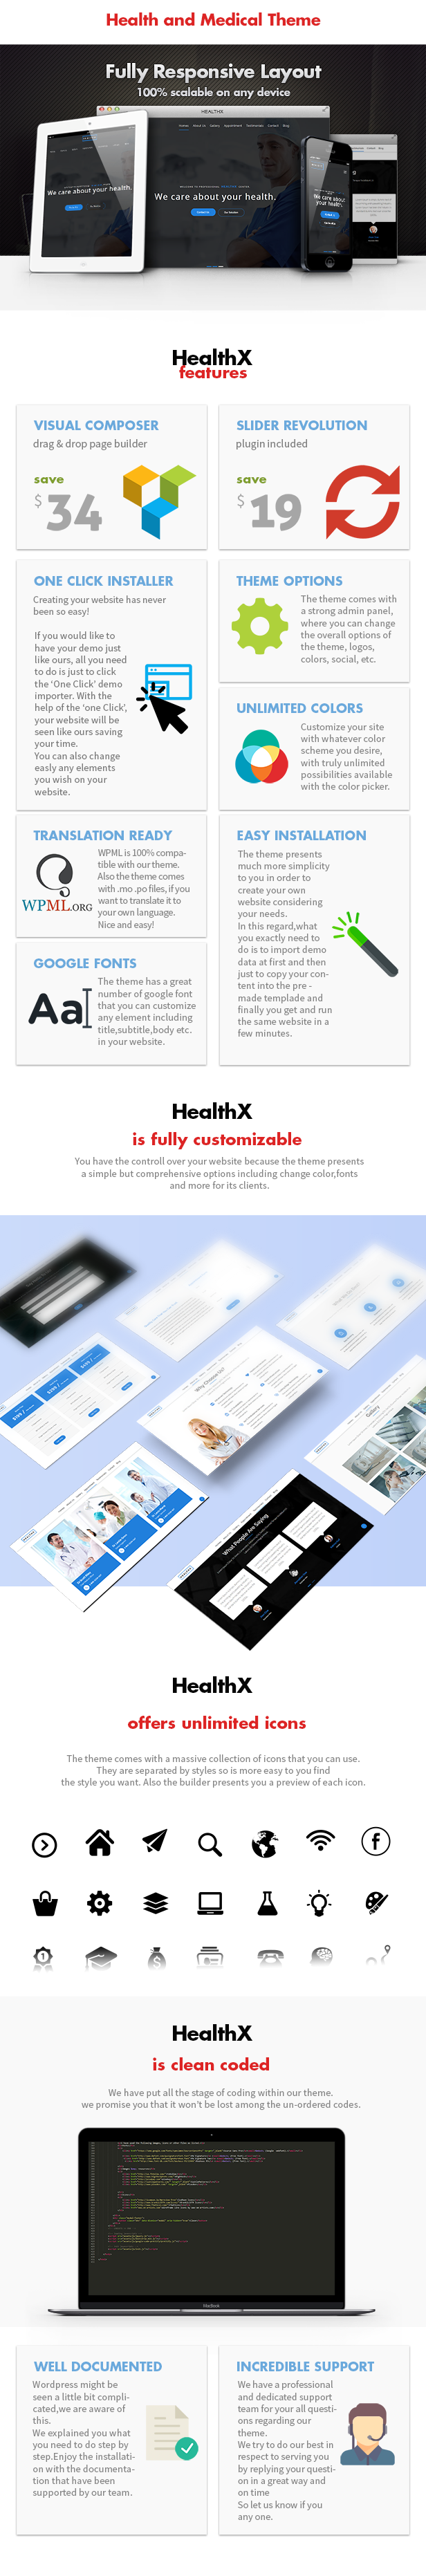 HealthX - Health and Medical Theme - 6